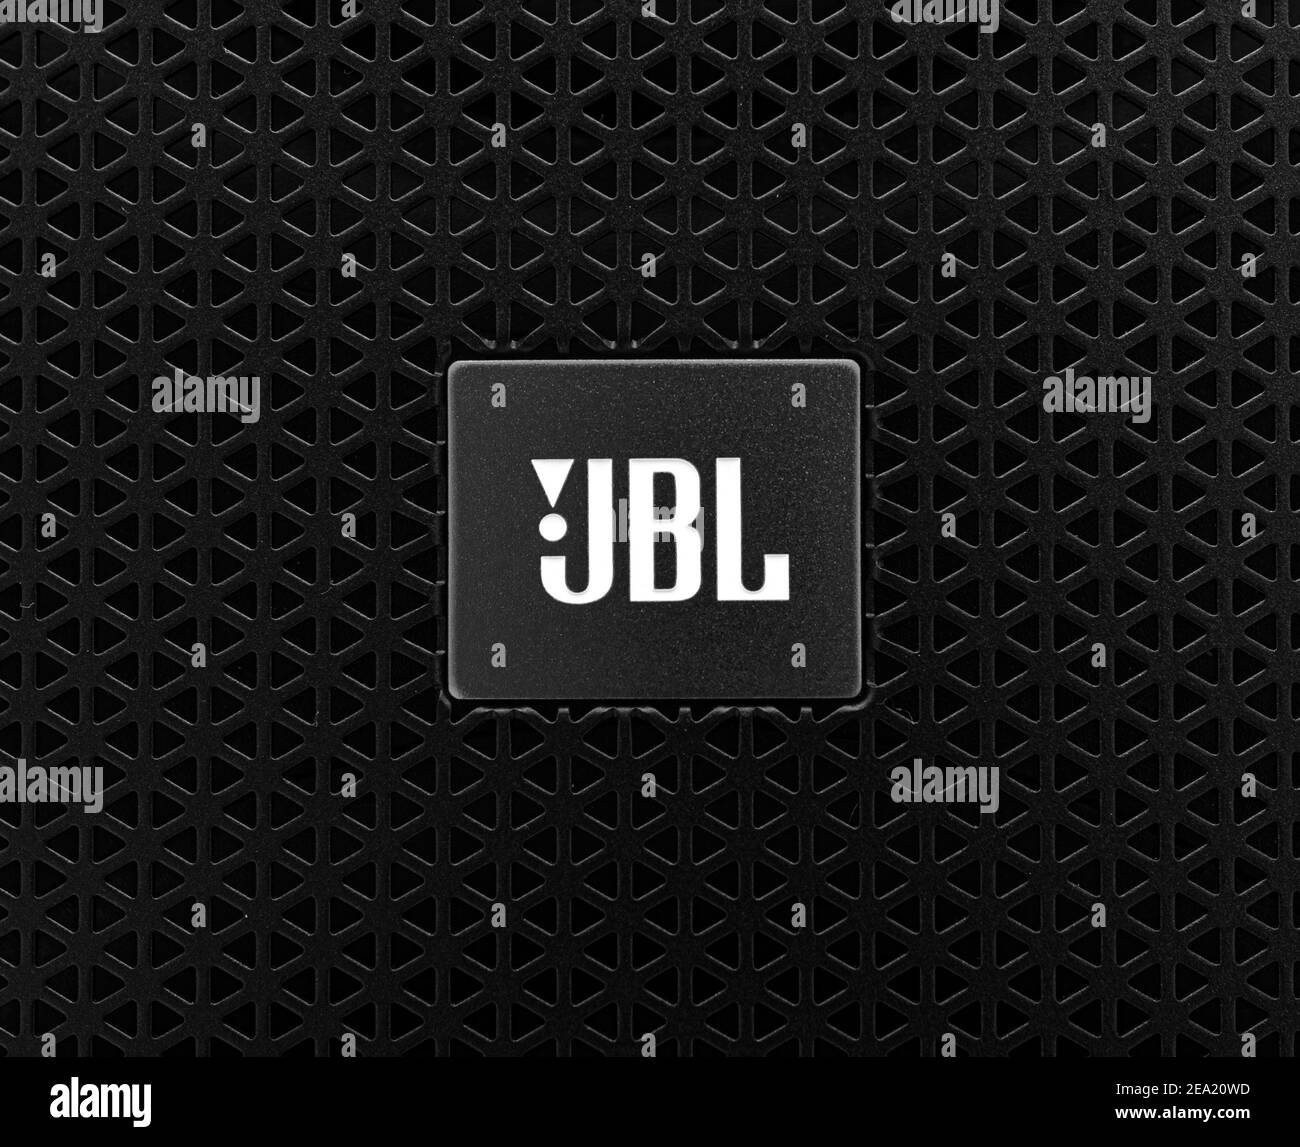 JBL logo on the speaker Stock Photo - Alamy